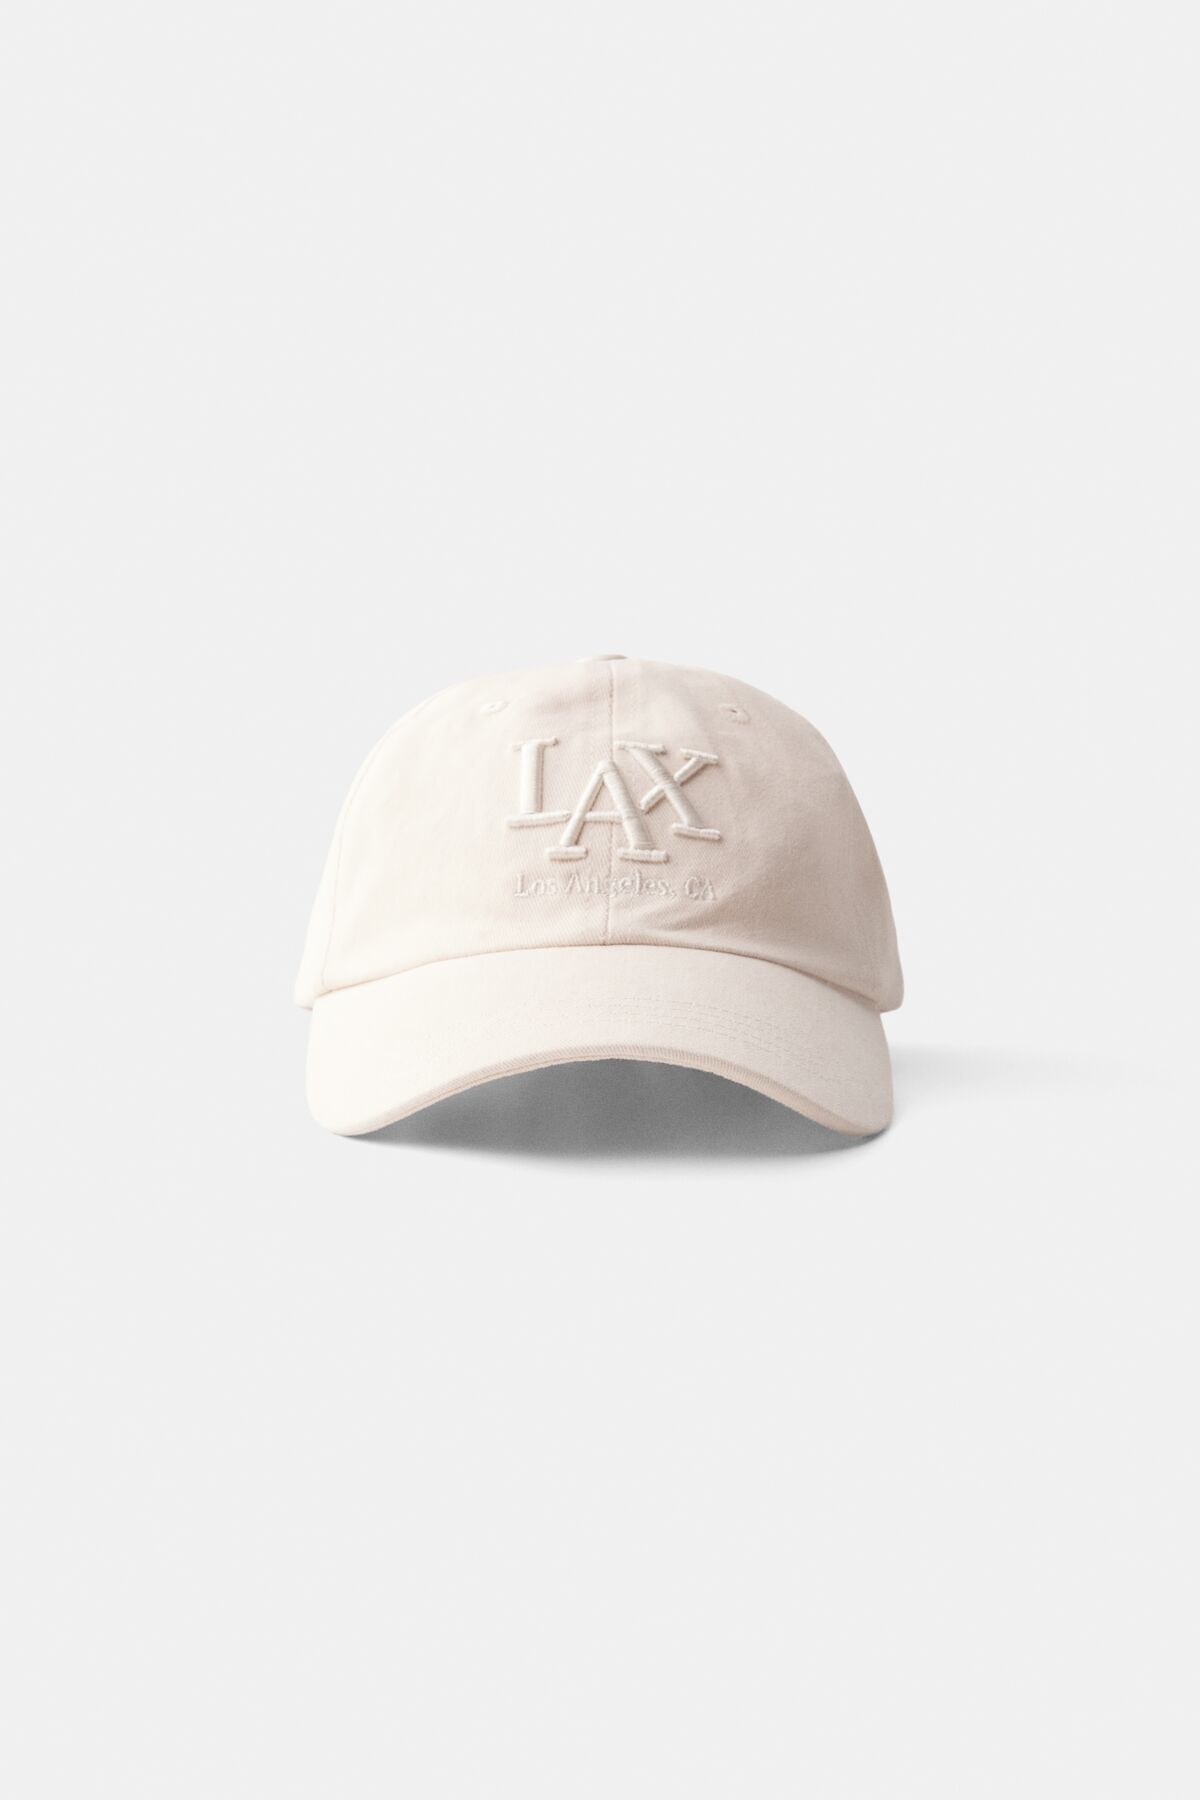 Bershka İşlemeli LAX şapka